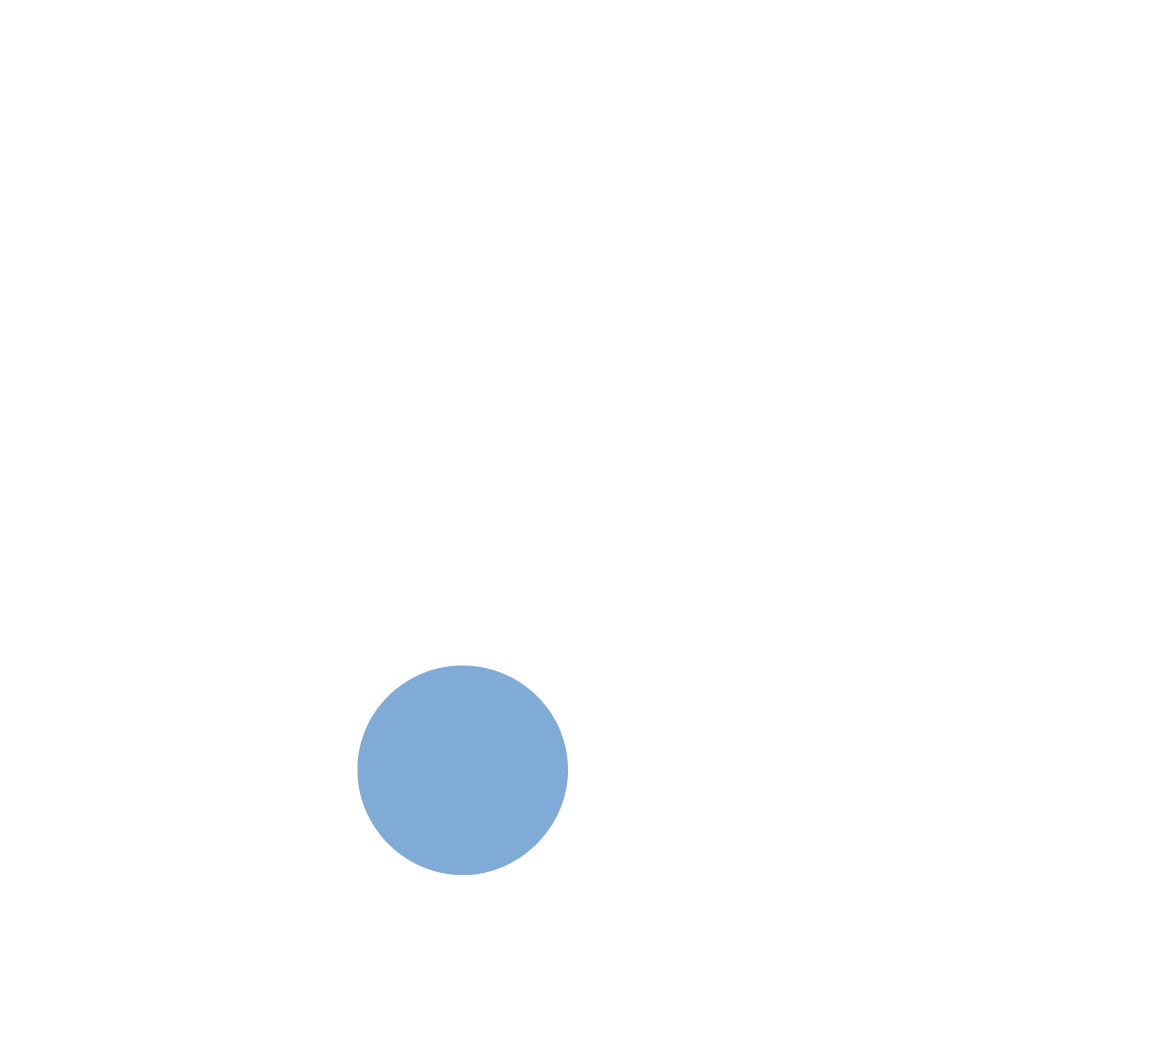 Studio Noordhoek - logo white